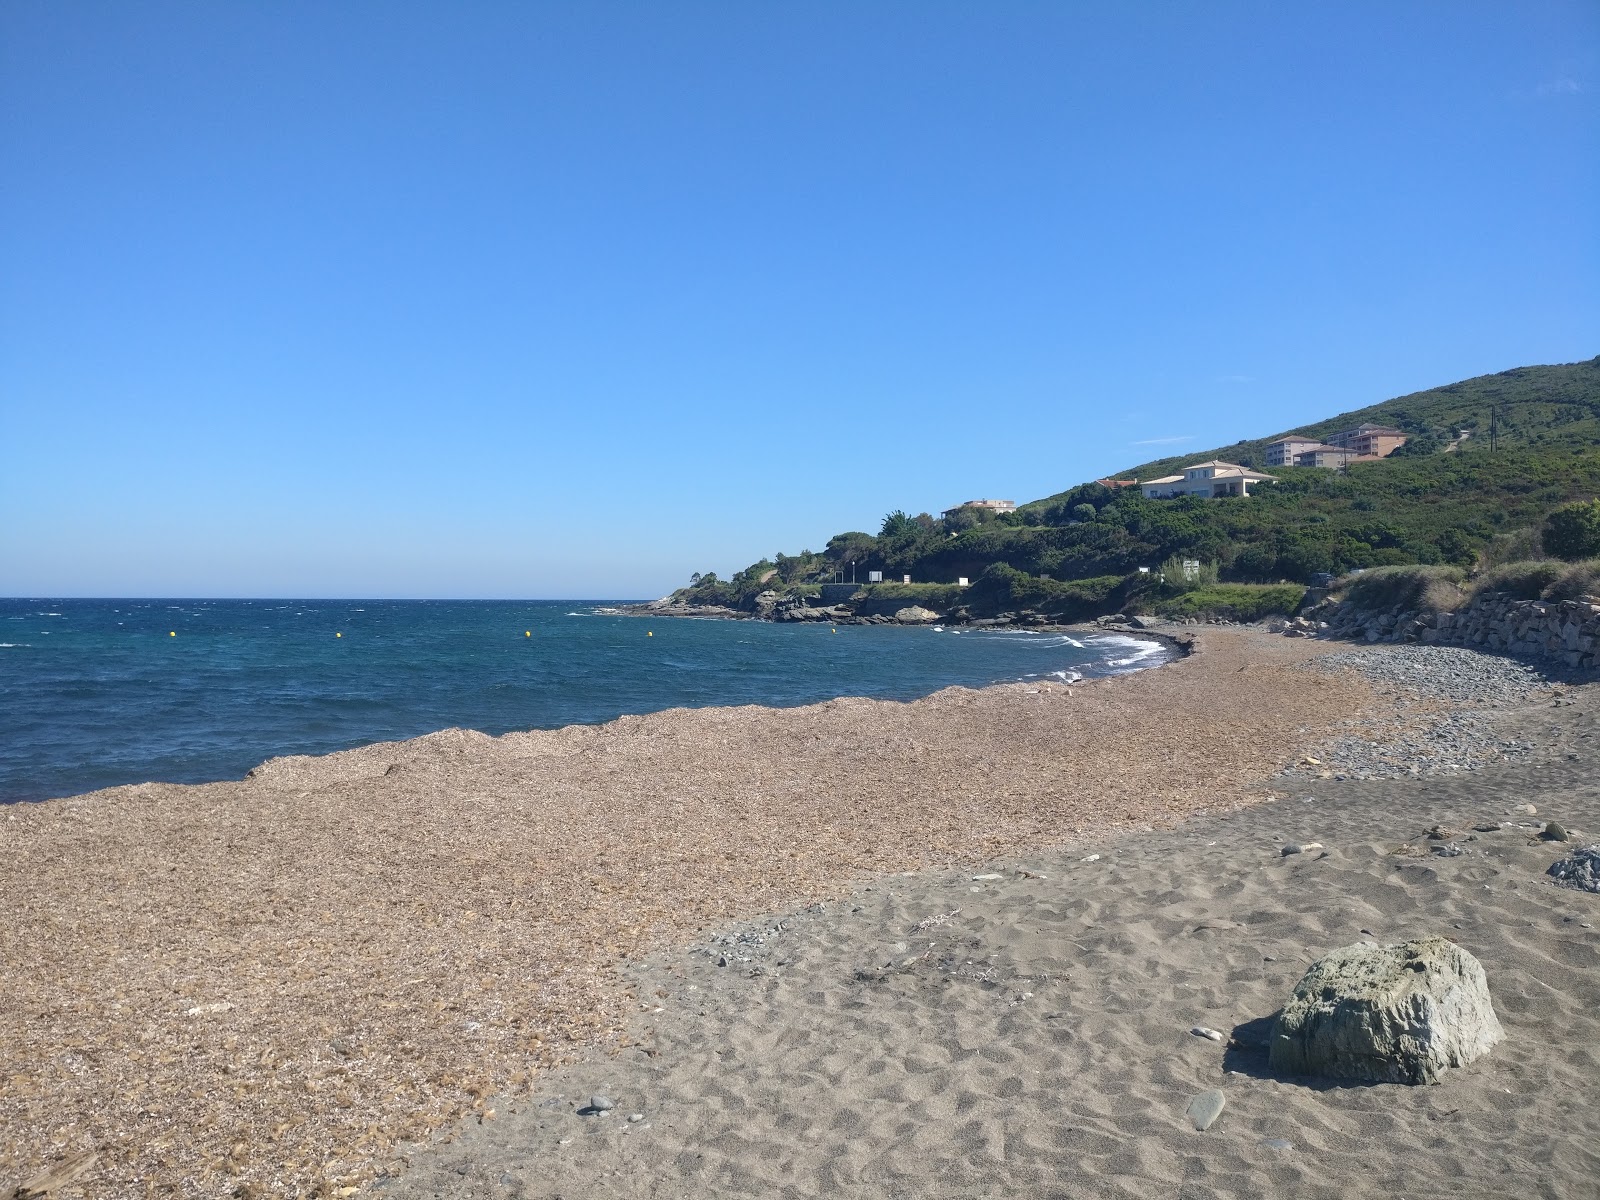 Plage De Santa Severa'in fotoğrafı doğrudan plaj ile birlikte